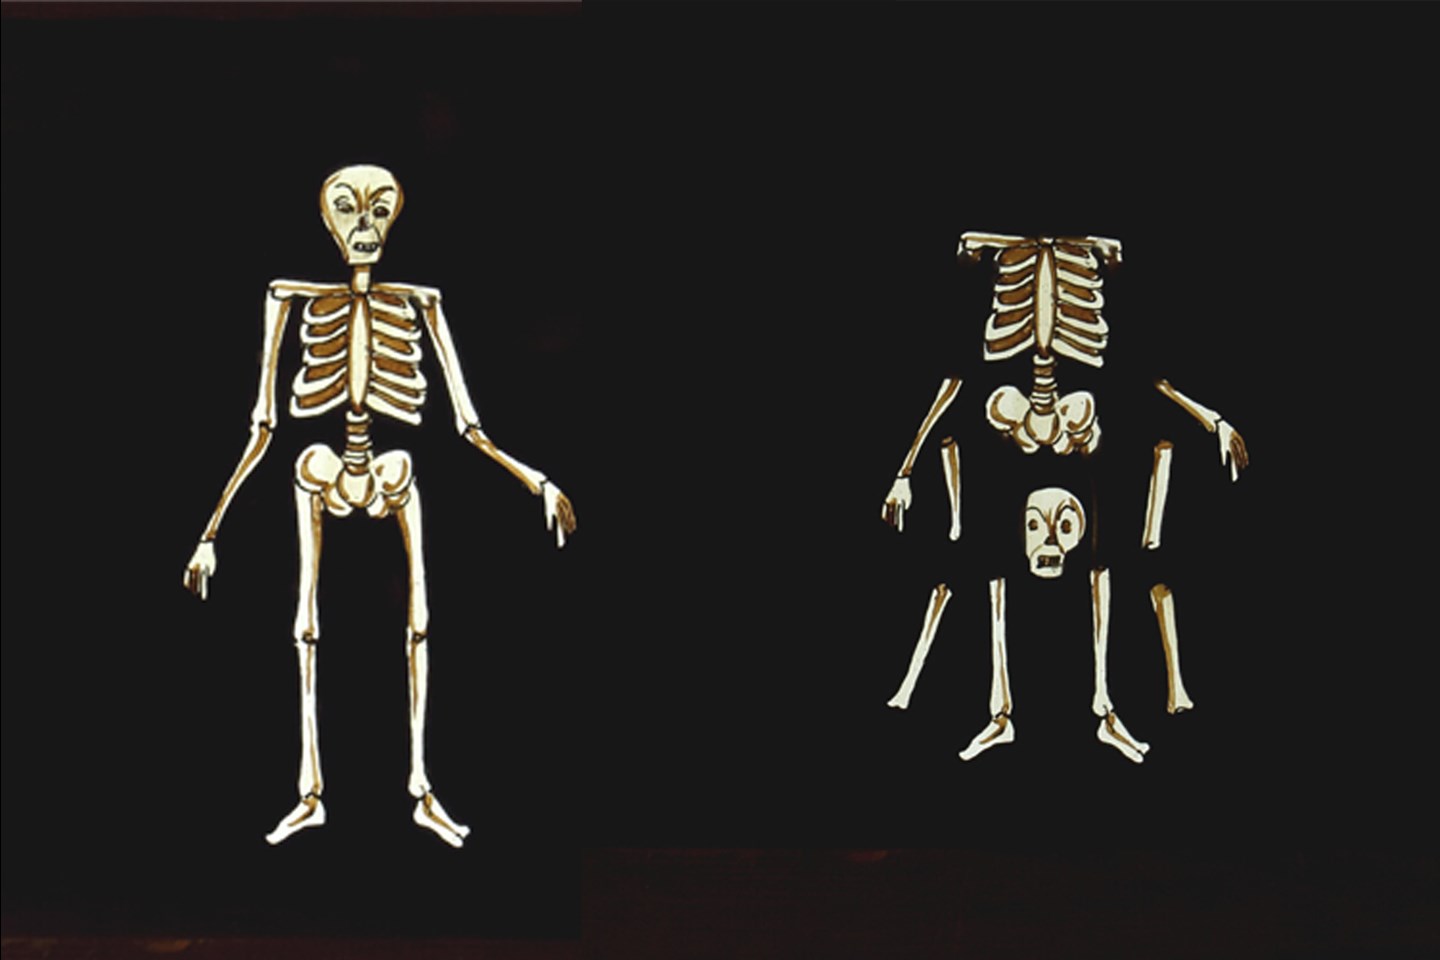 Skeletons2